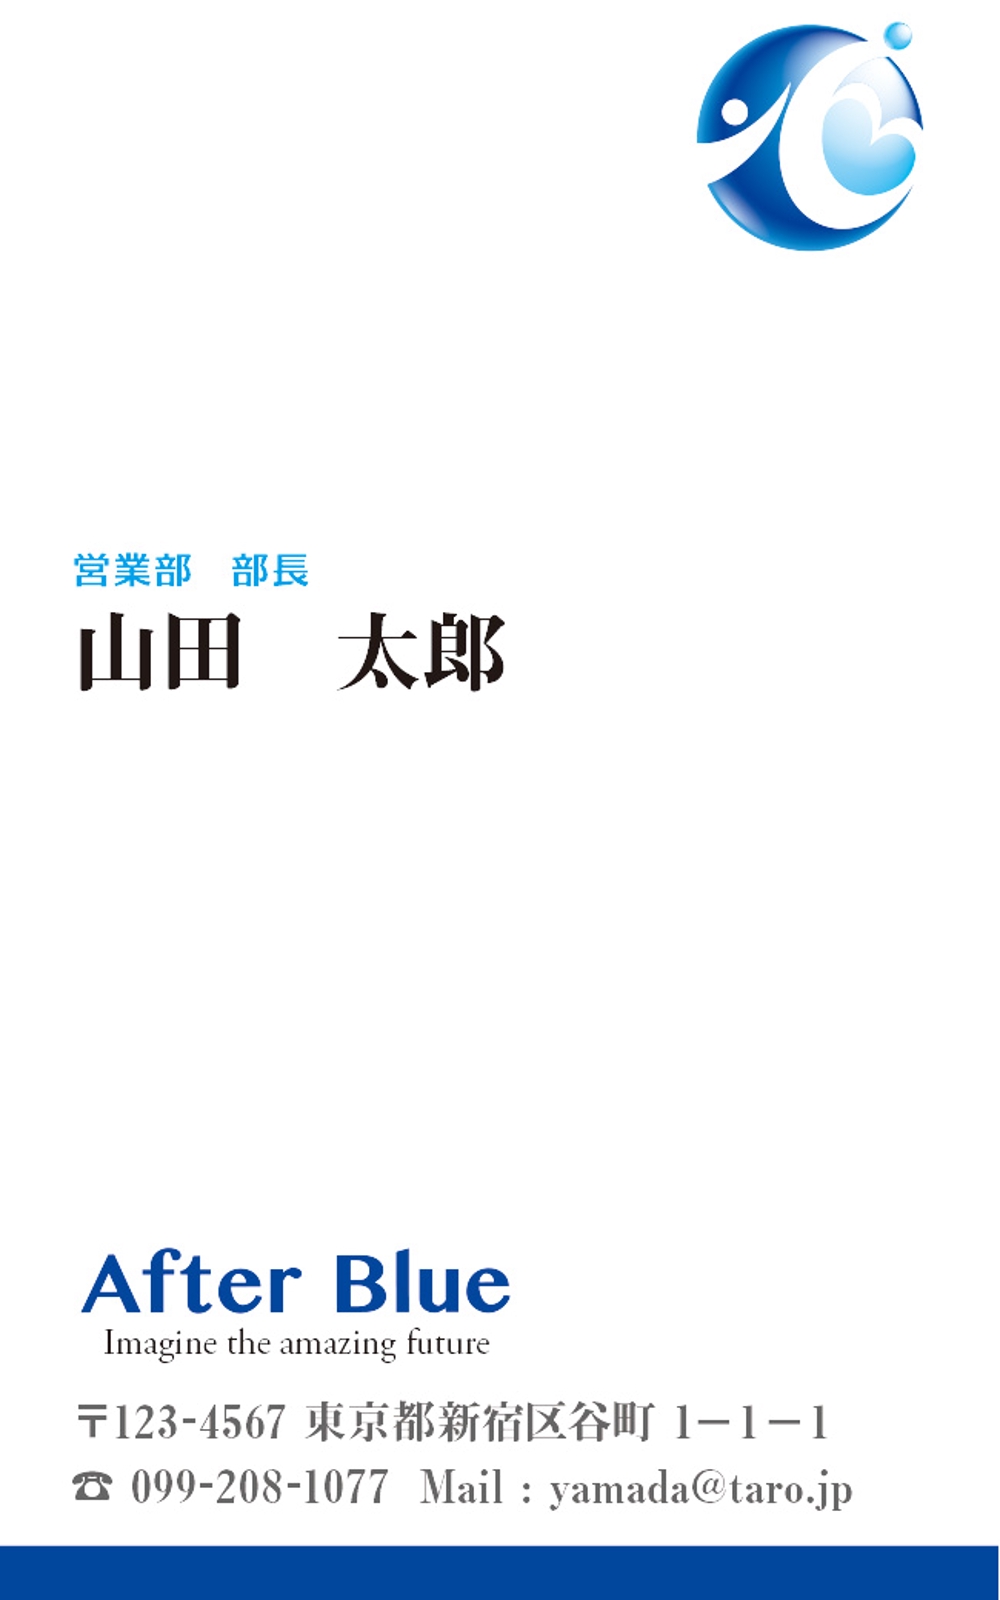 After Blue株式会社の名刺デザイン